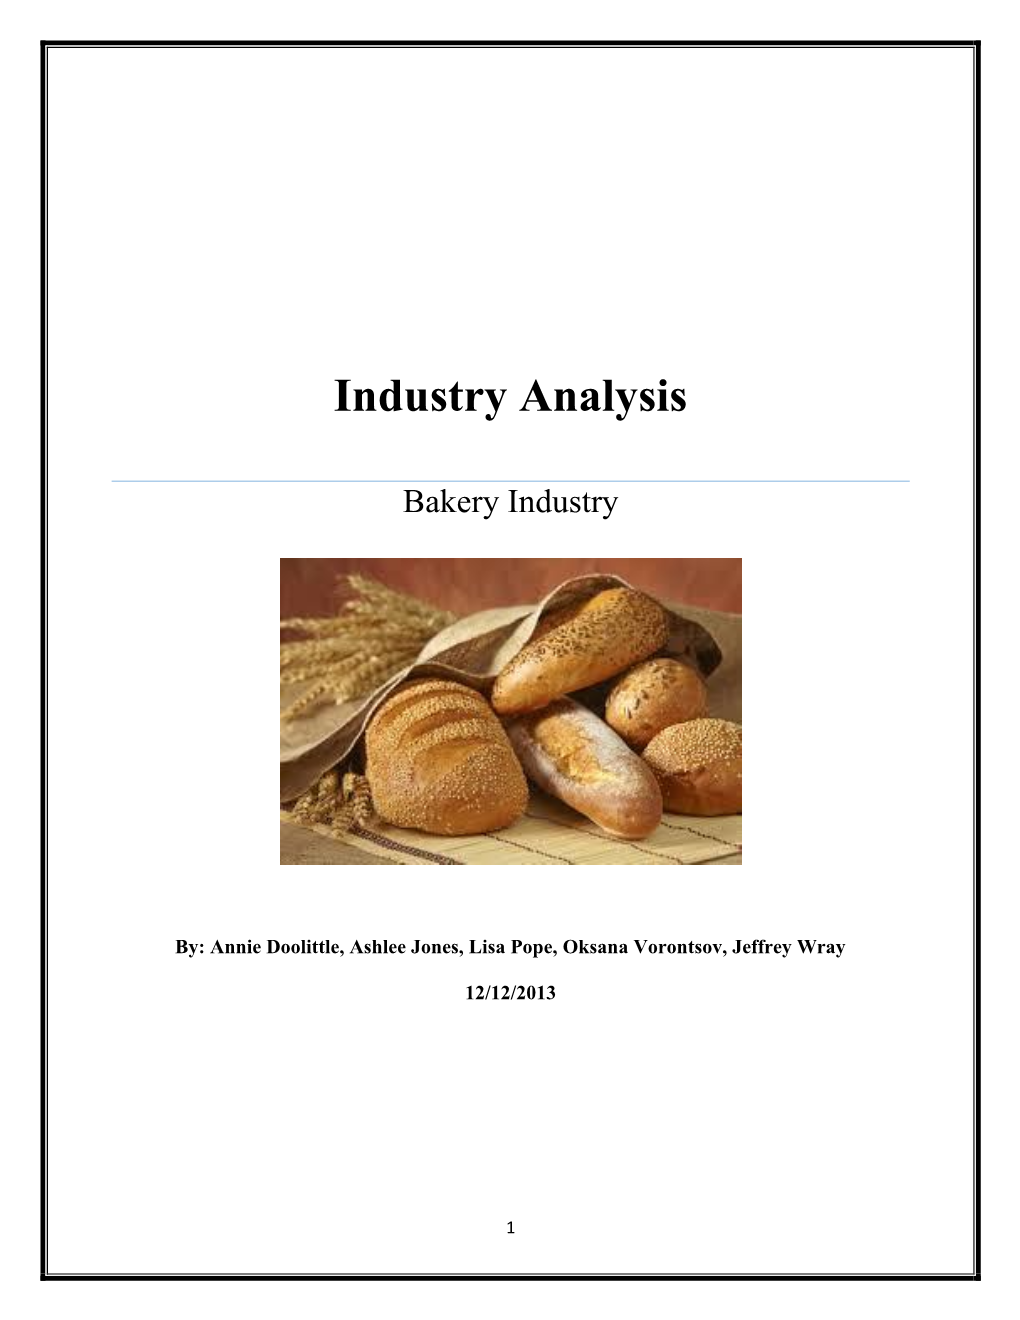 Bakery Industry Analysis